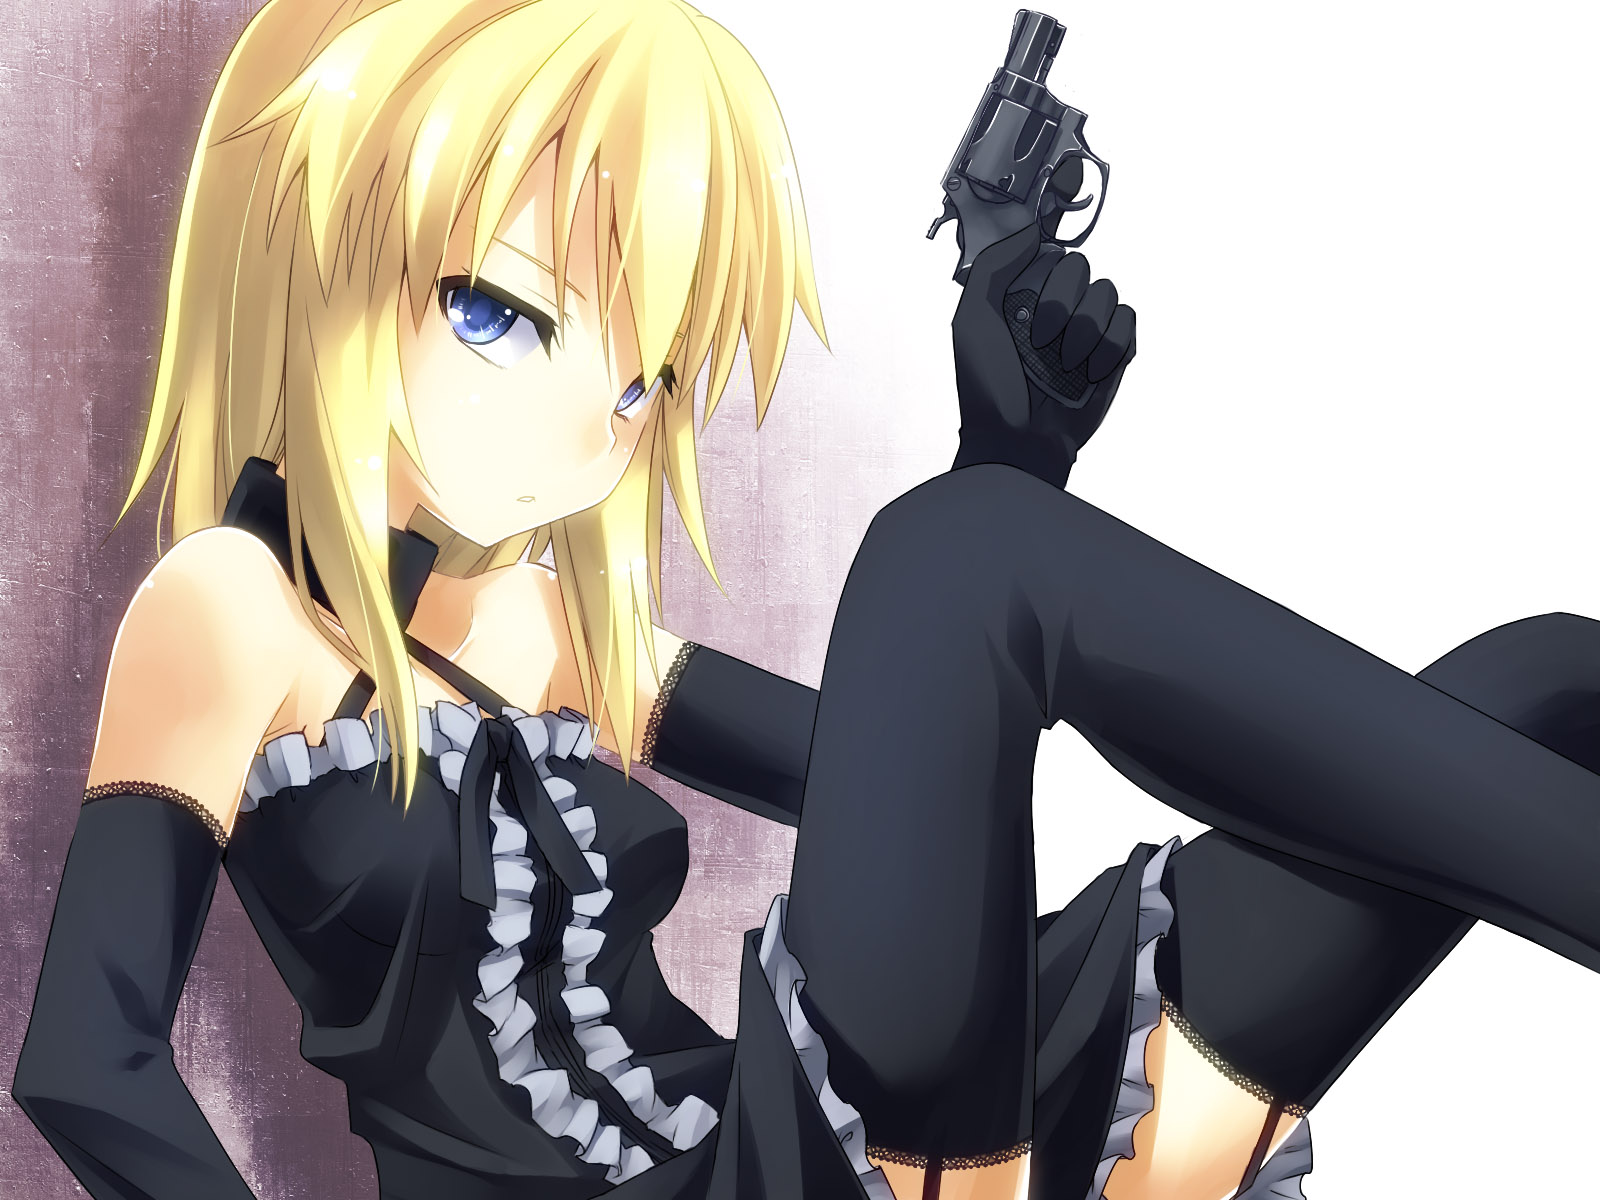 Blonde anime girl with gun